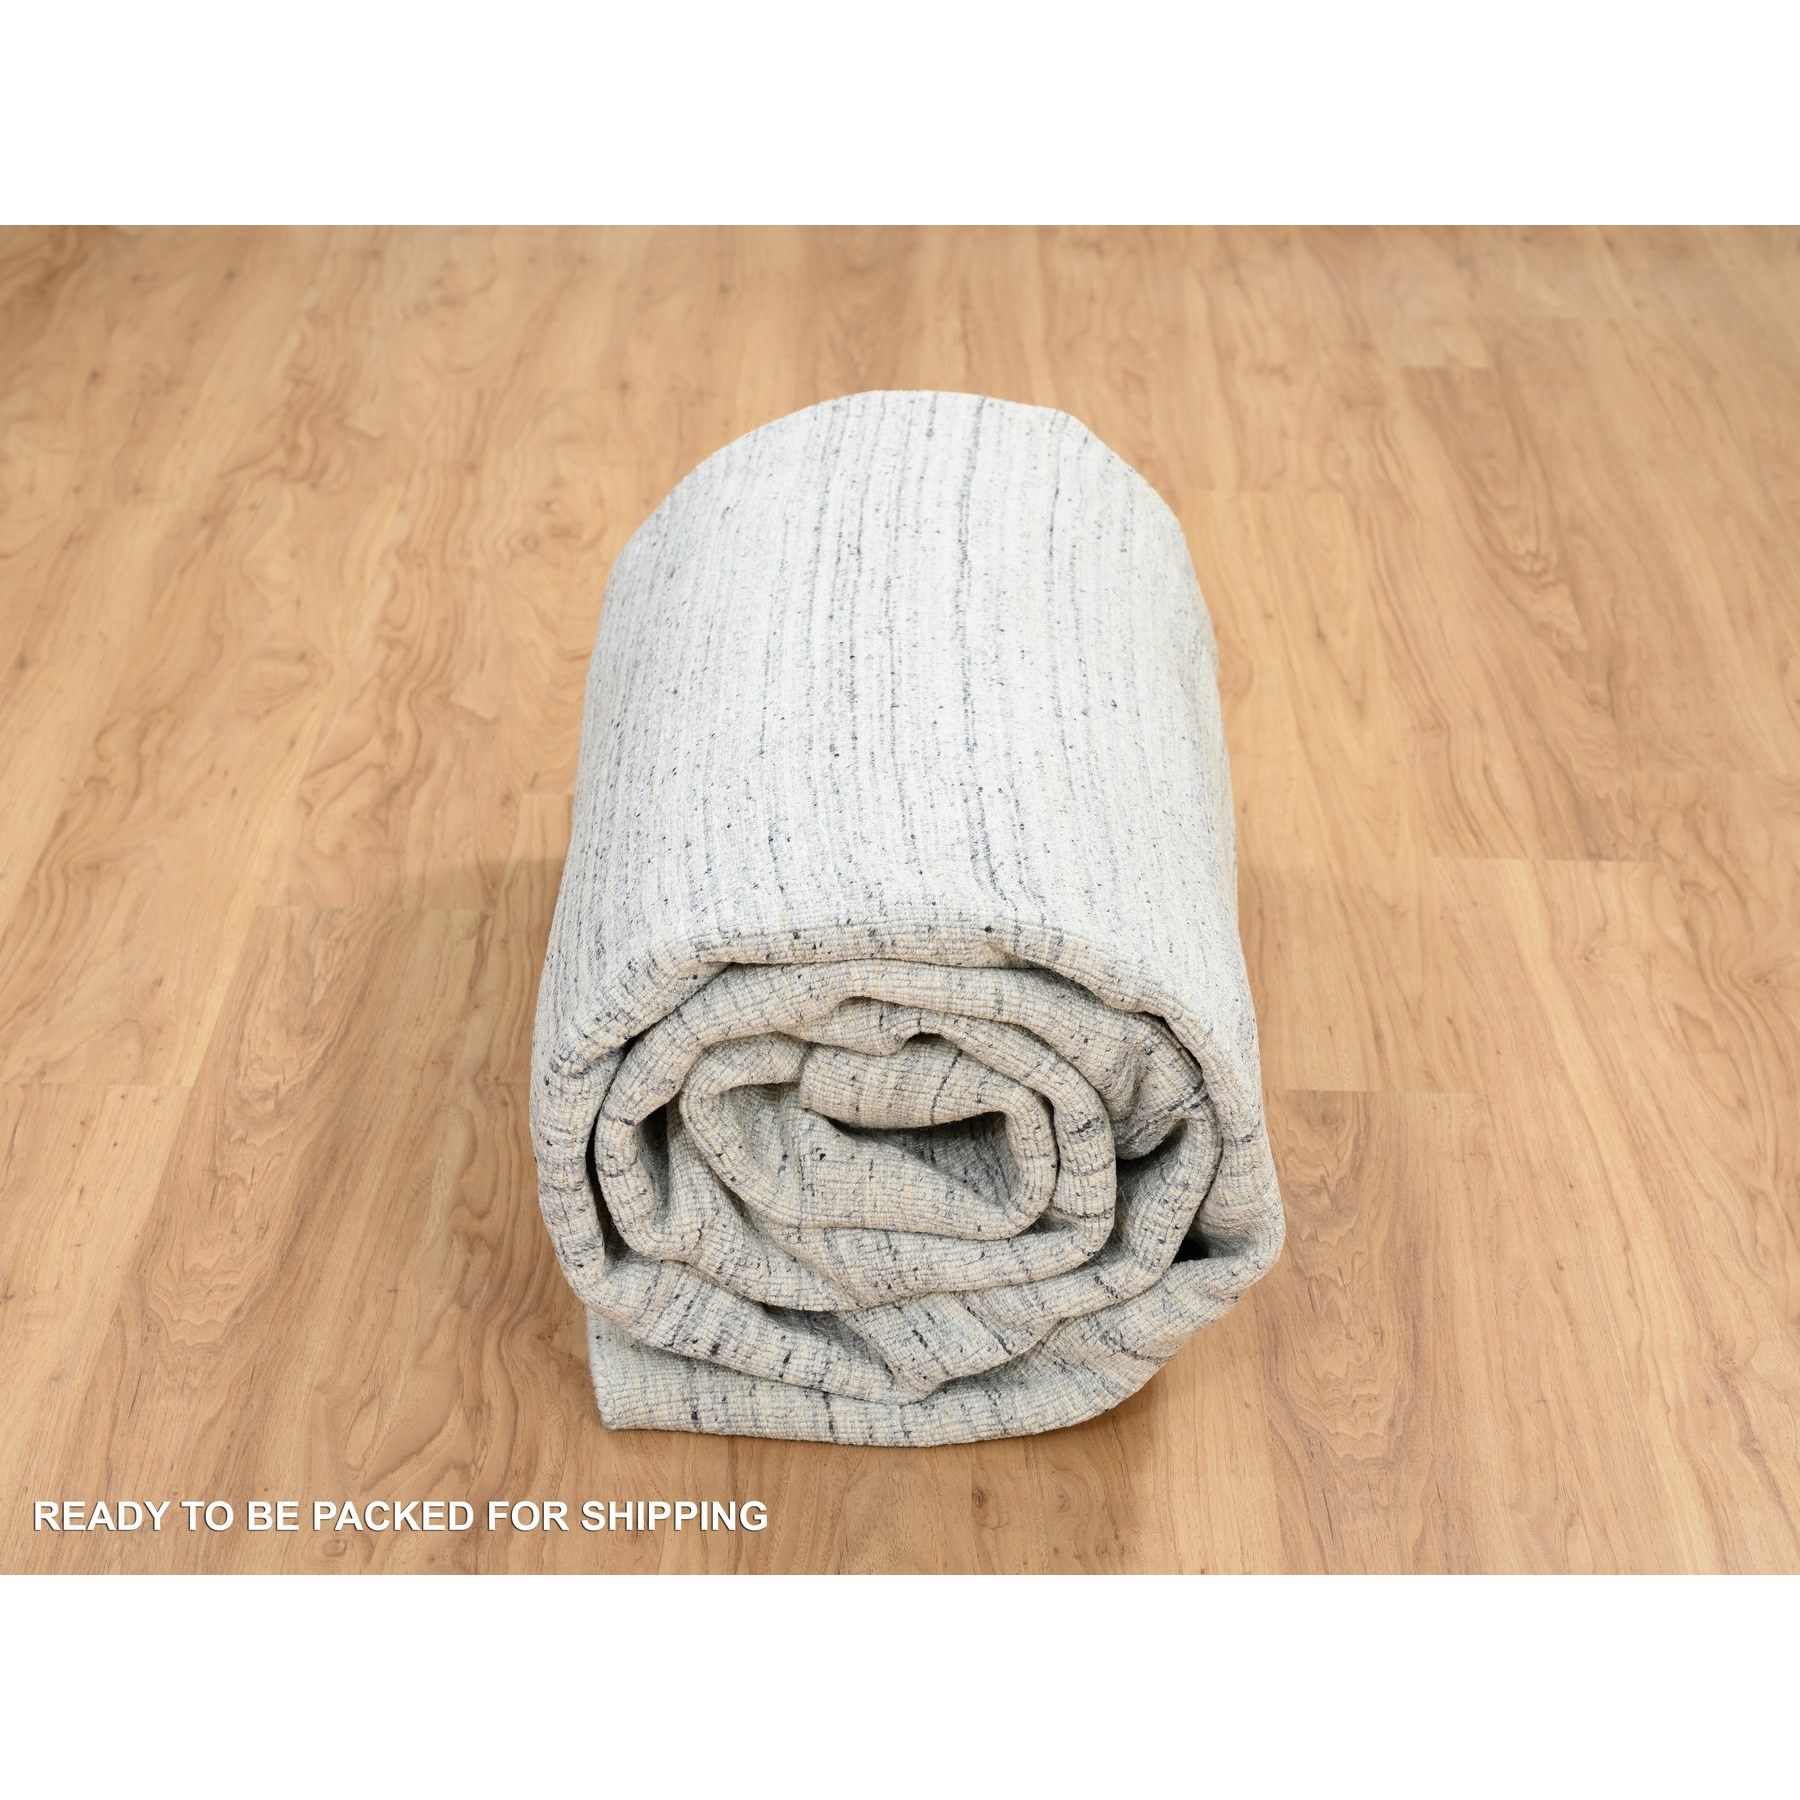 9'x11'10" Ivory, Soft Pile Organic Wool, Hand Loomed Plain Modern Striped Design, Oriental Rug 